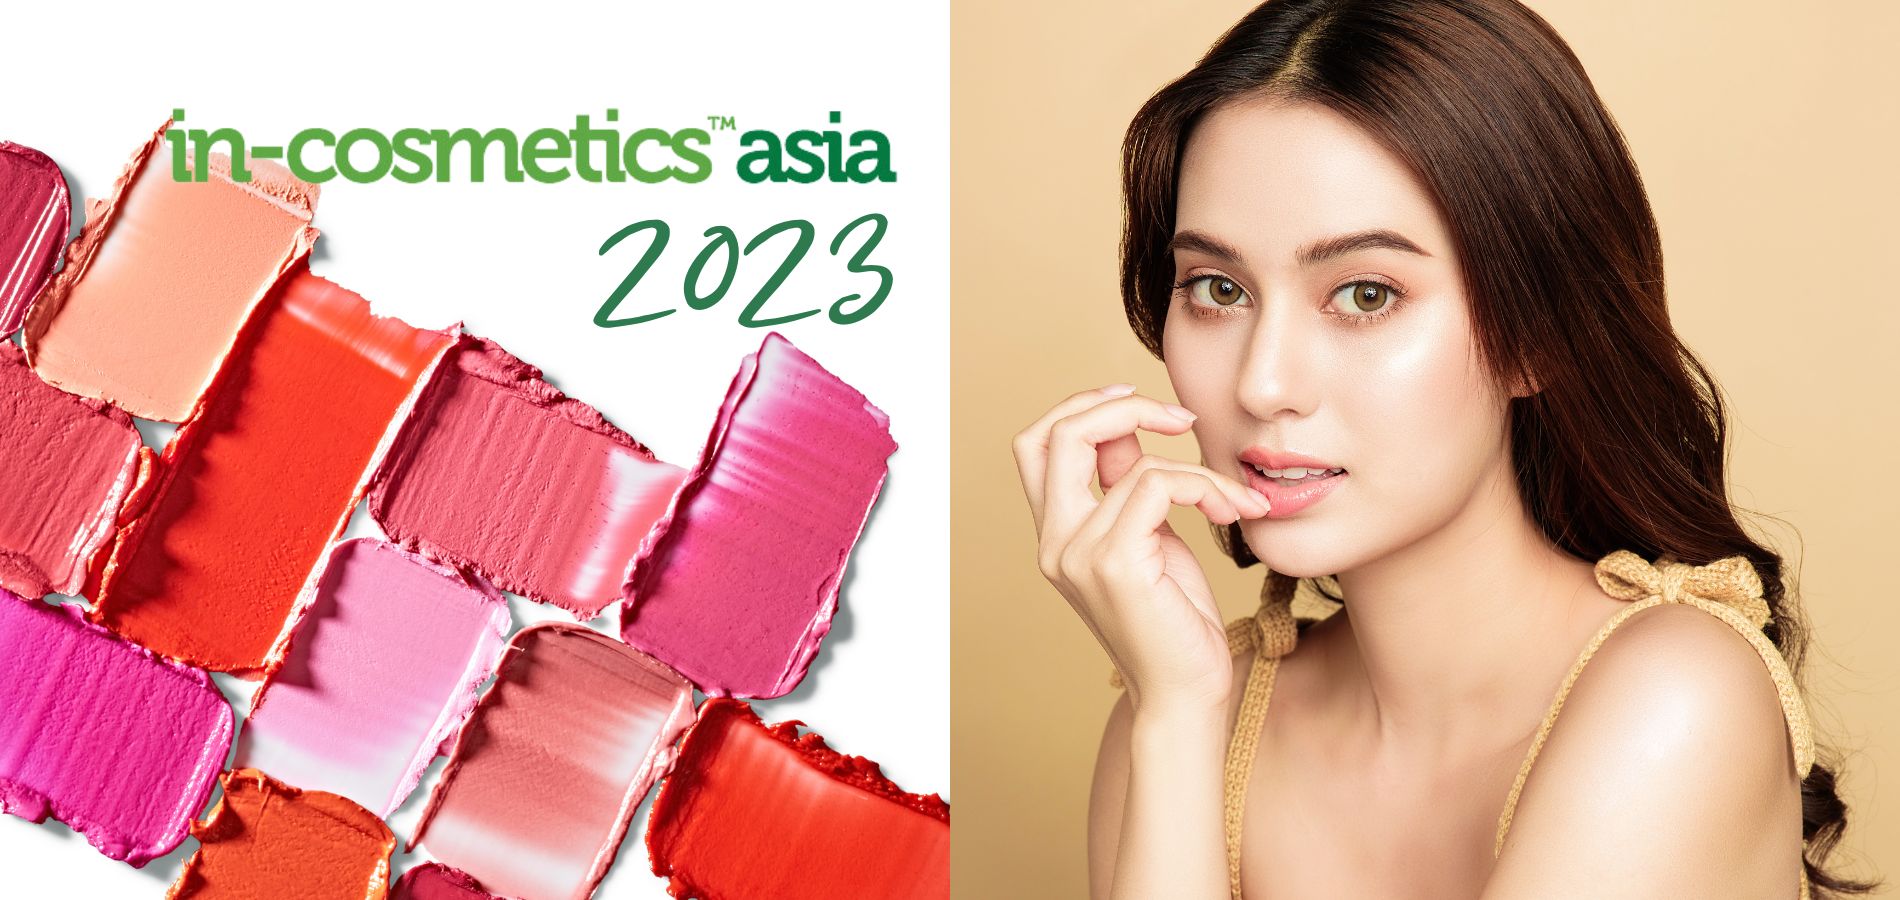 In-Cosmetics Asia 2023 Website Featured Image